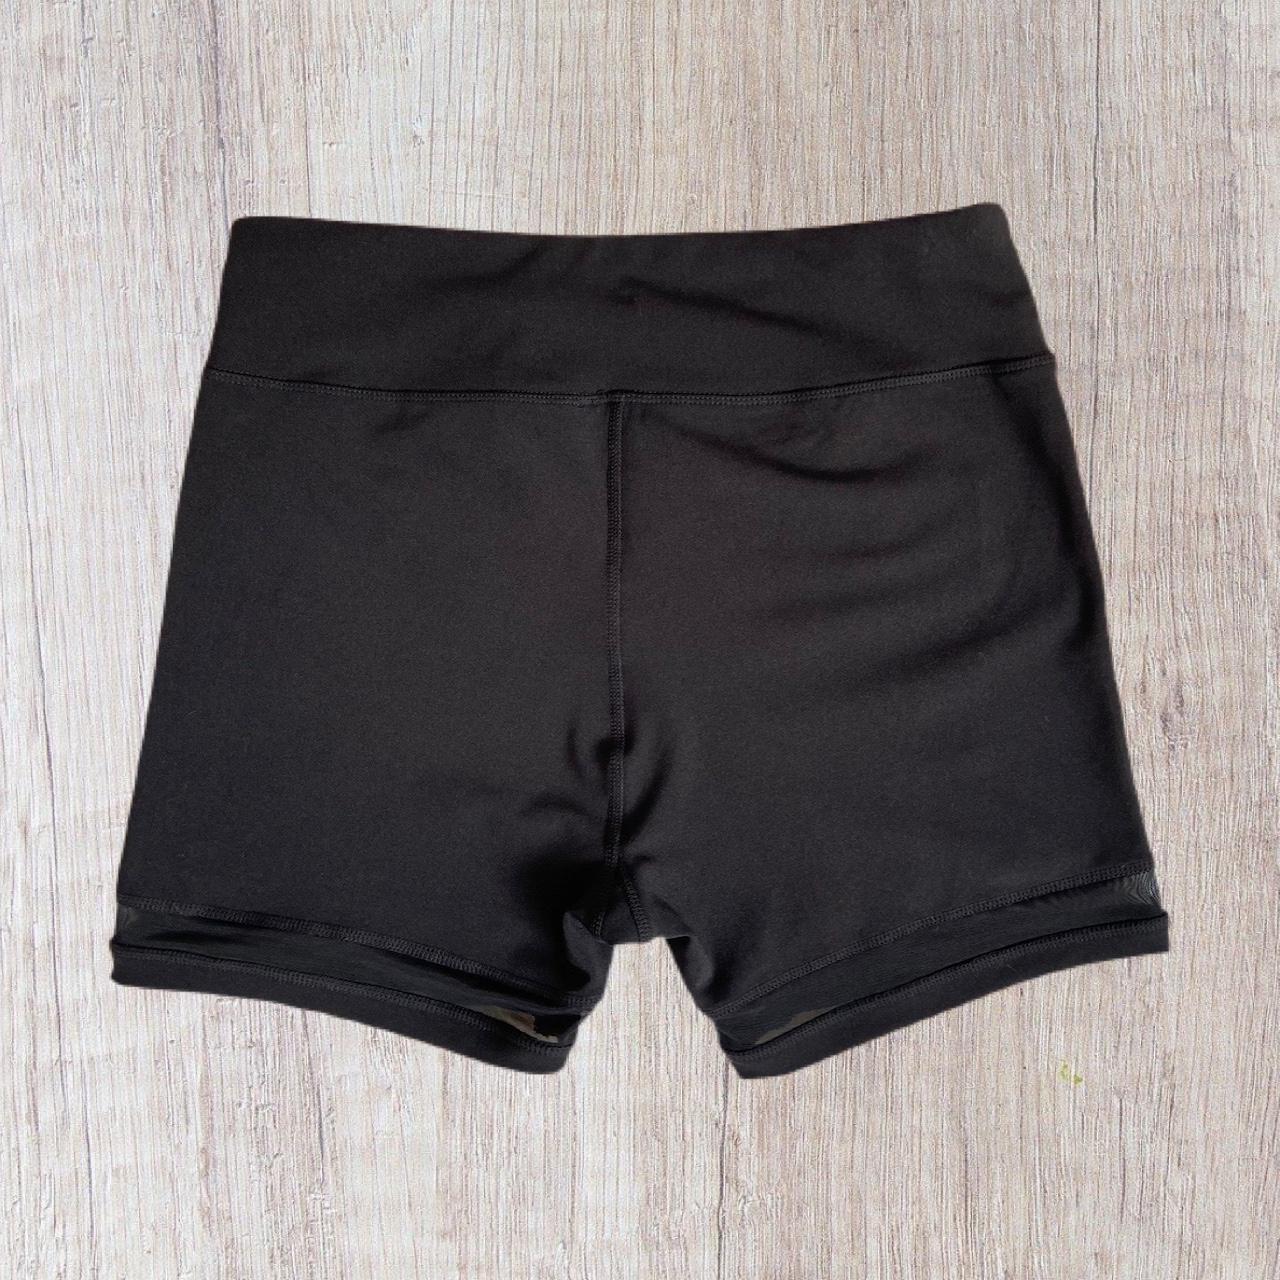 Product Image 2 - Black Mesh Sport Shorts Contrast